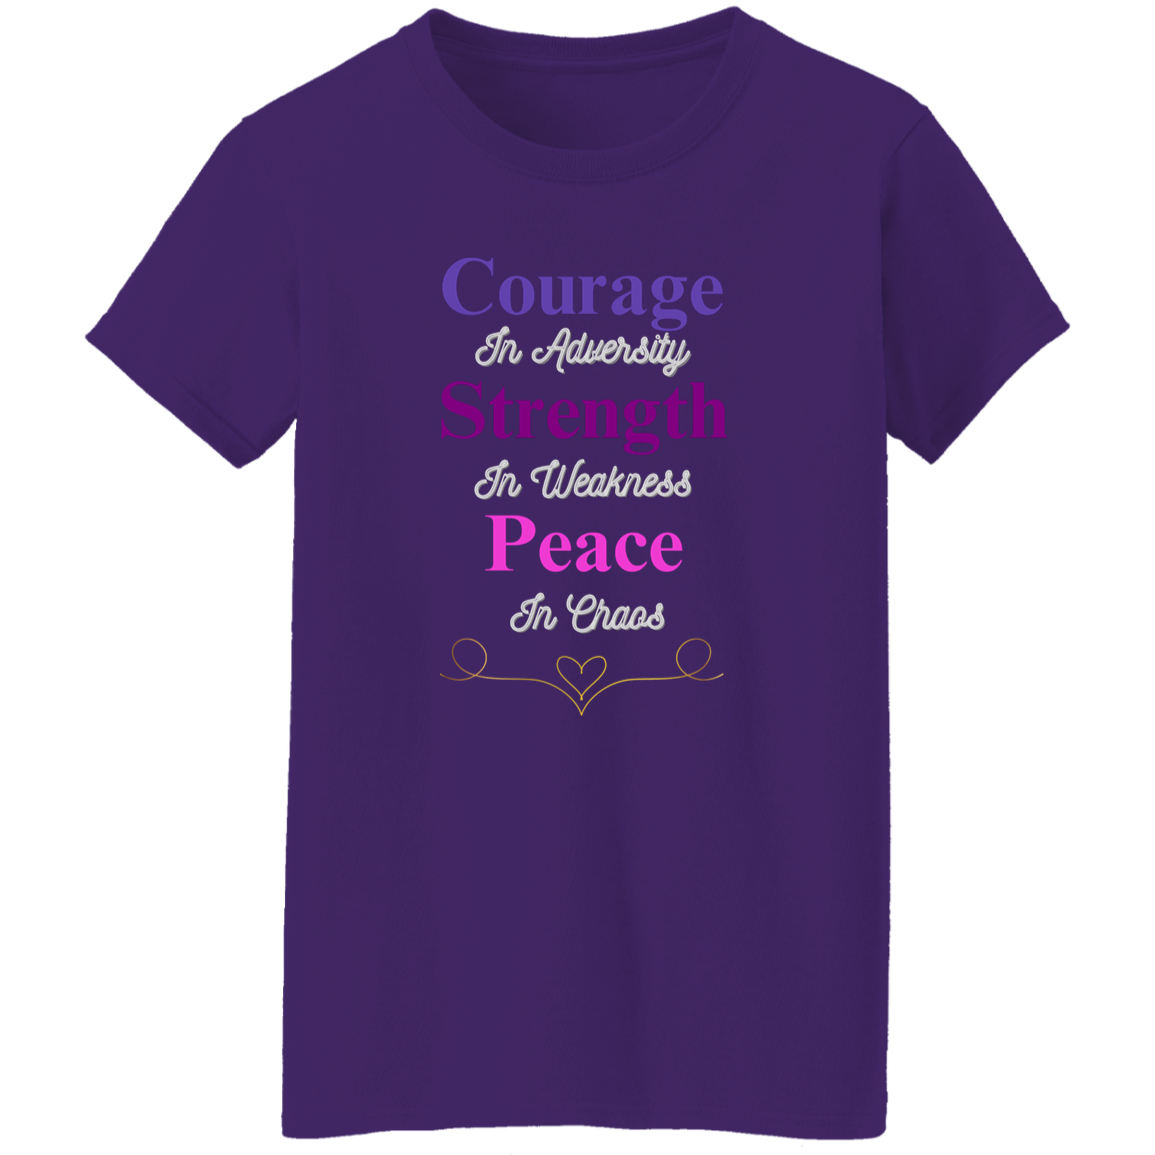 Courage in Adversity Women's T-shirt| Women's Cotton T-Shirt| Short Sleeve